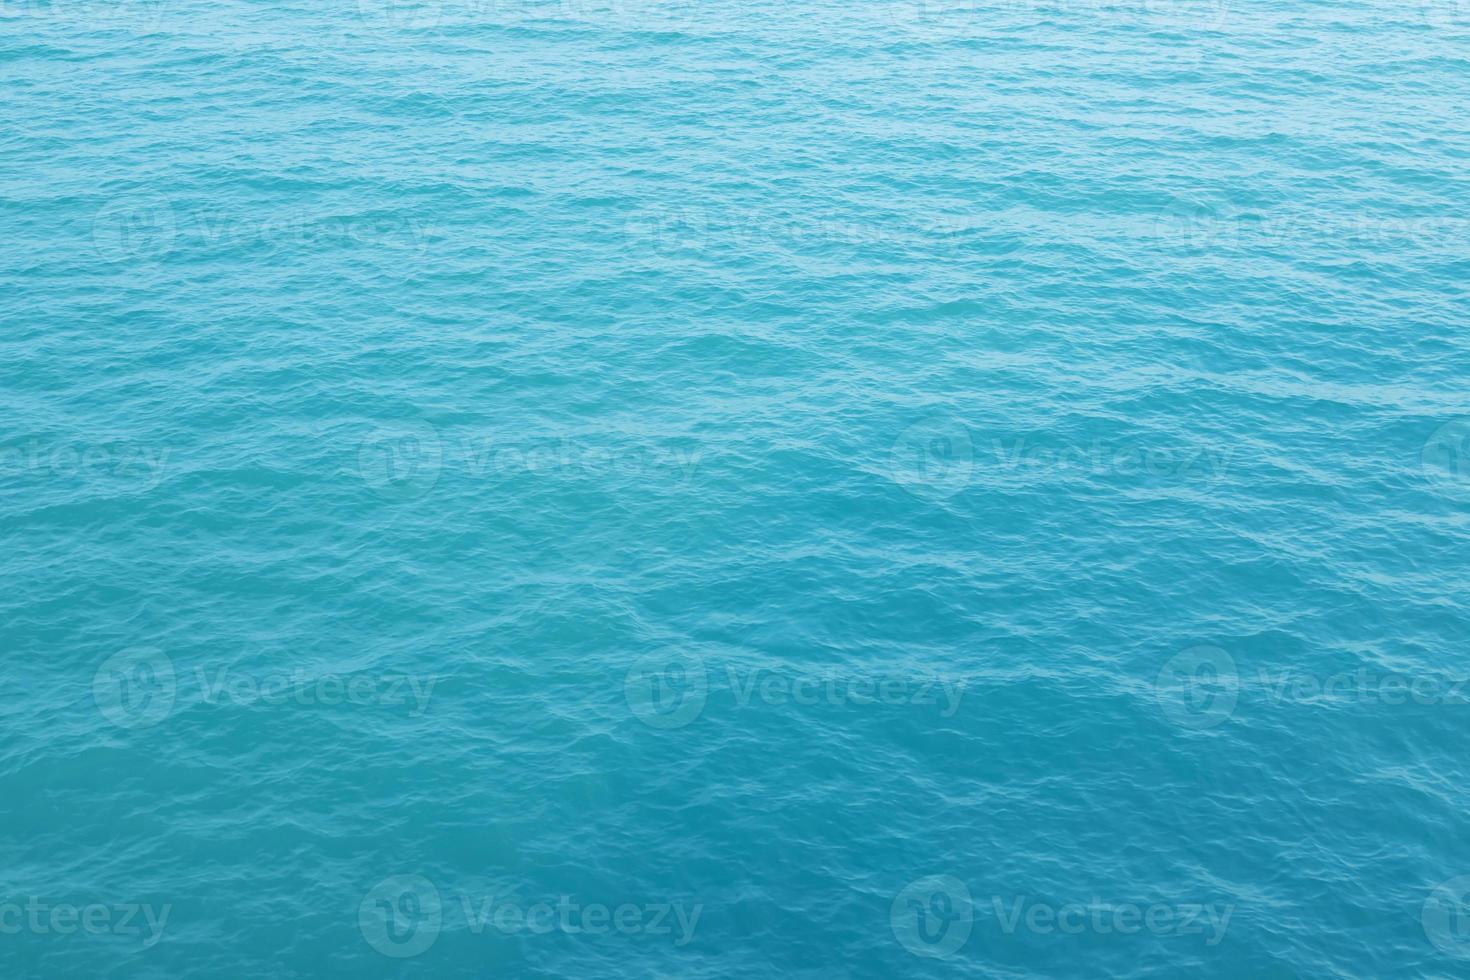 zee golven in oceaan golf spatten rimpel water. blauwe waterachtergrond. foto